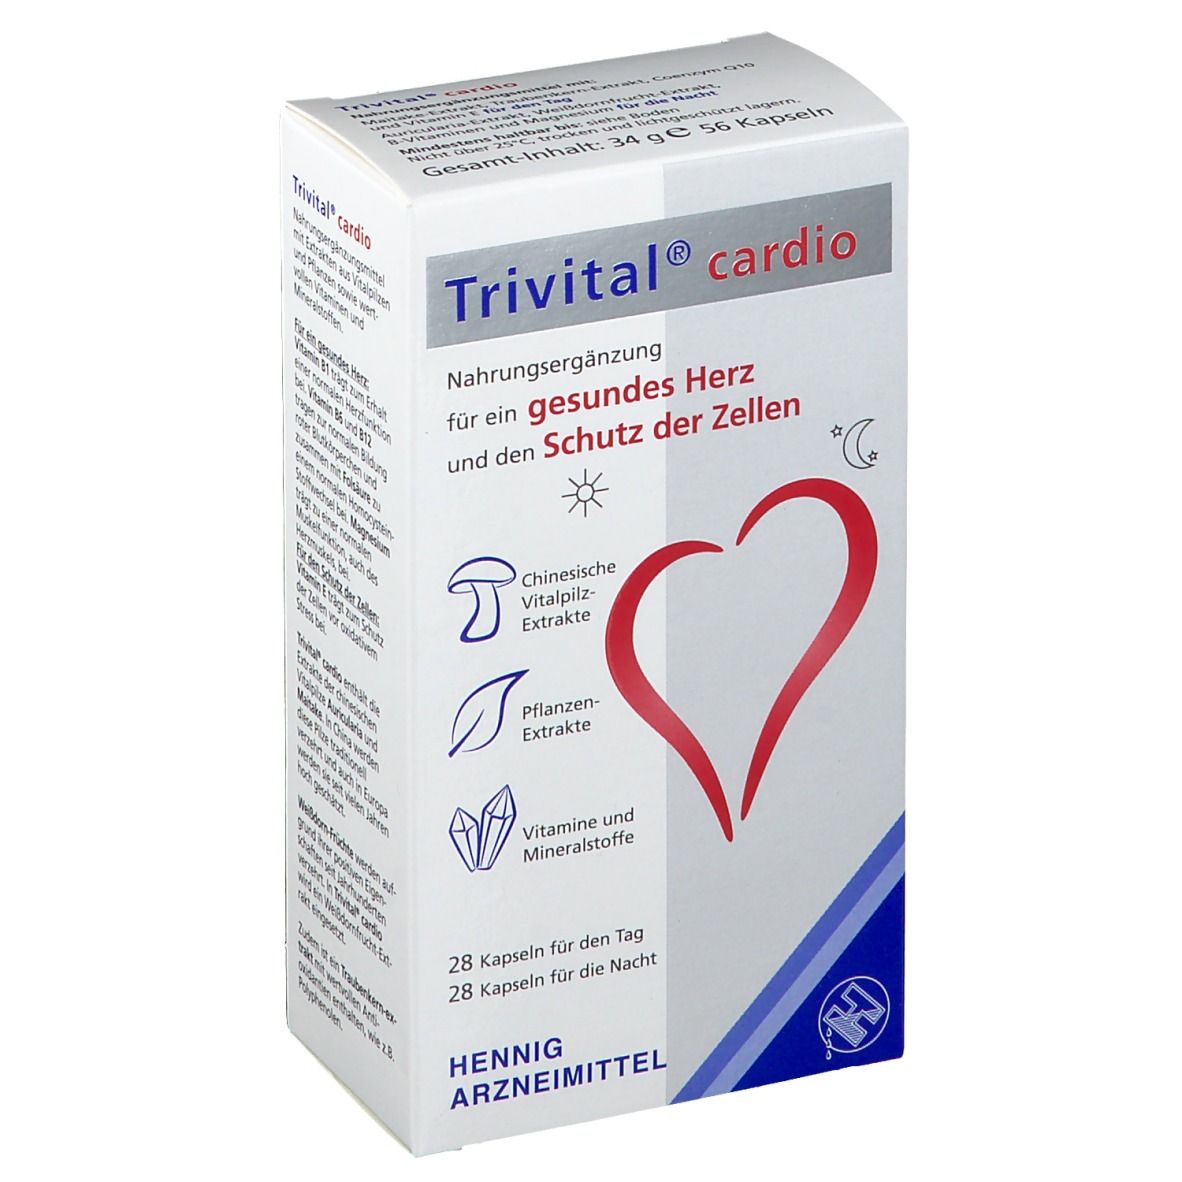 Trivital® cardio